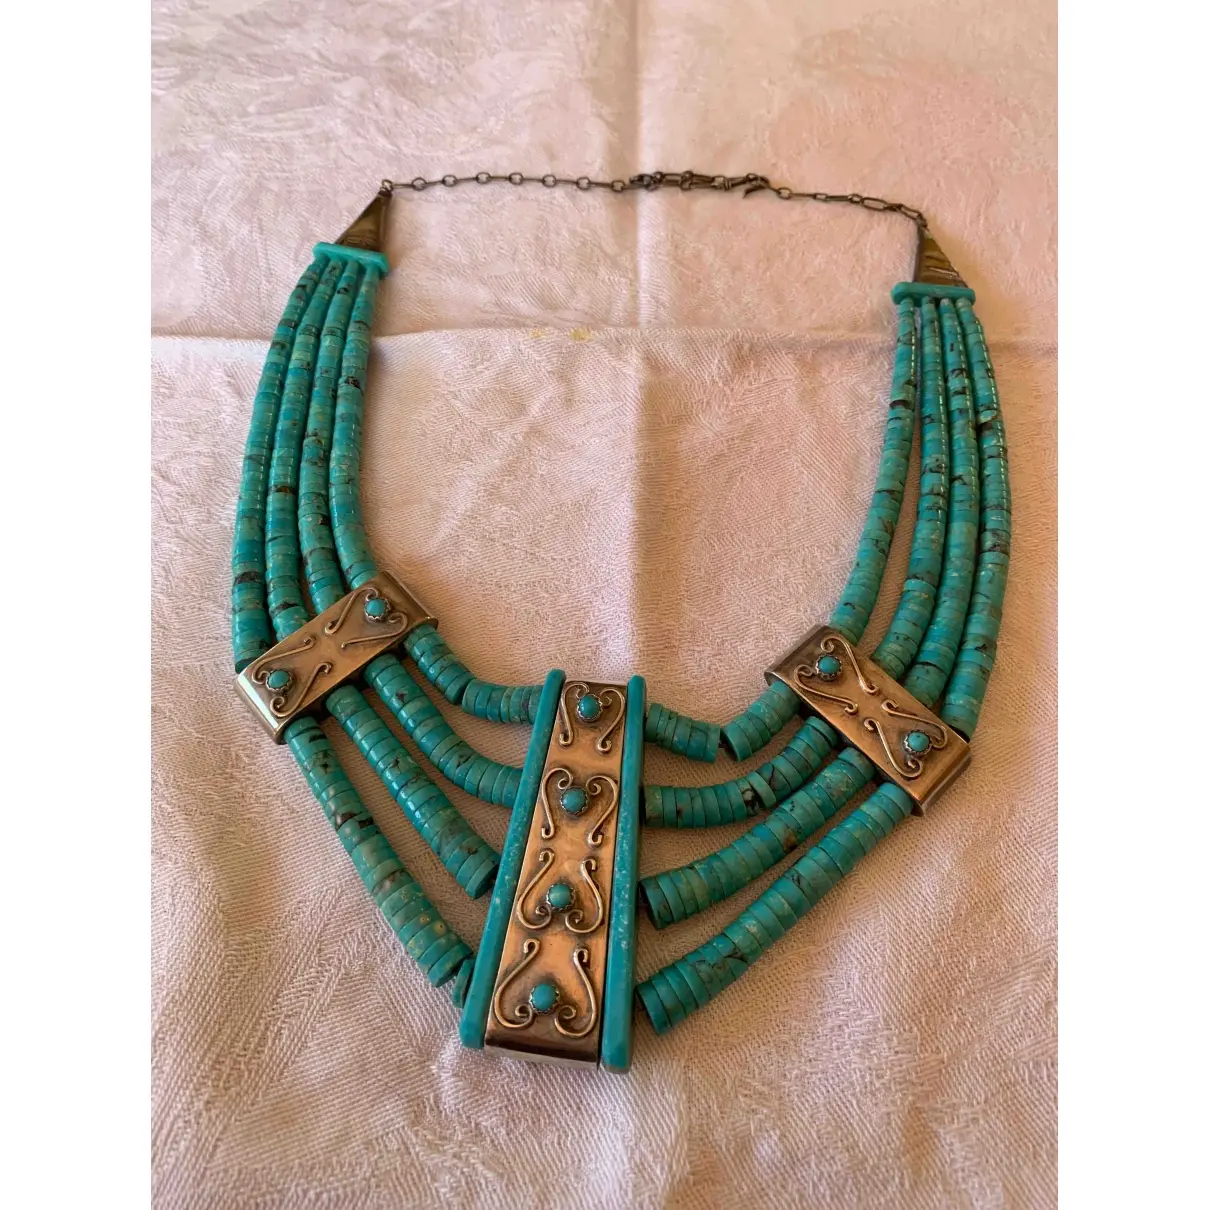 Harpo Silver necklace for sale